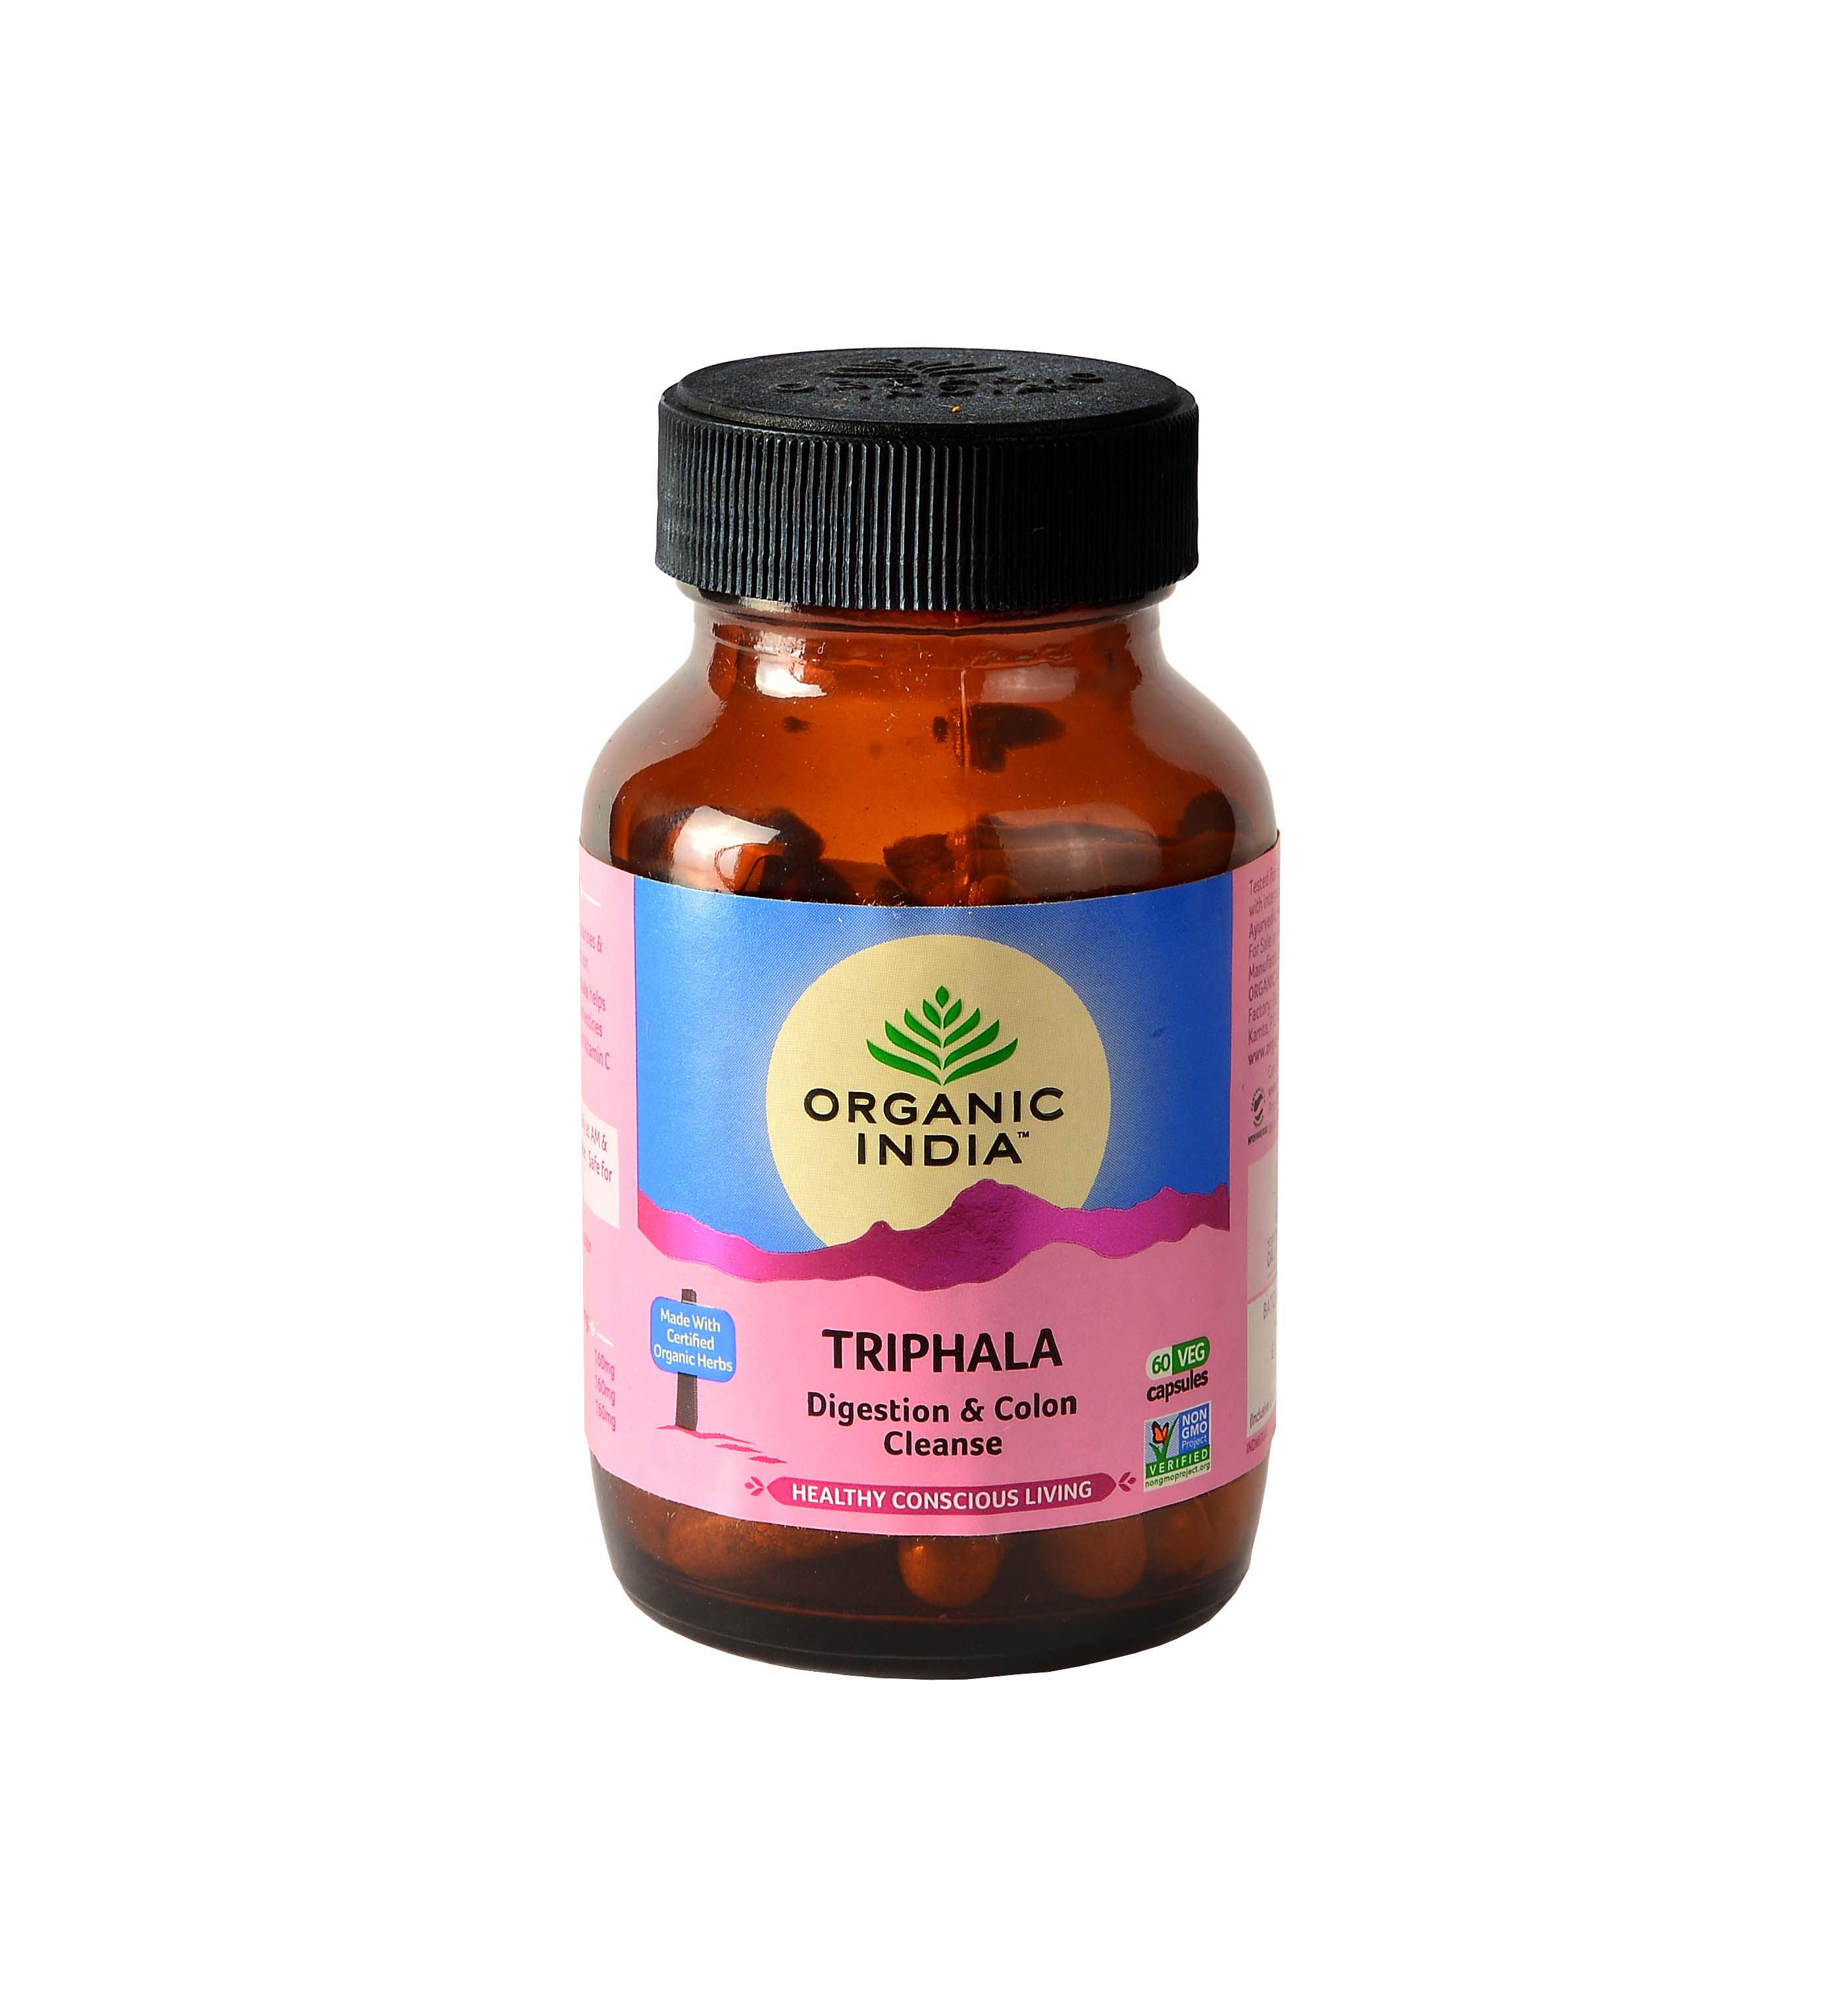 Buy Organic India Triphala Capsule at Best Price Online